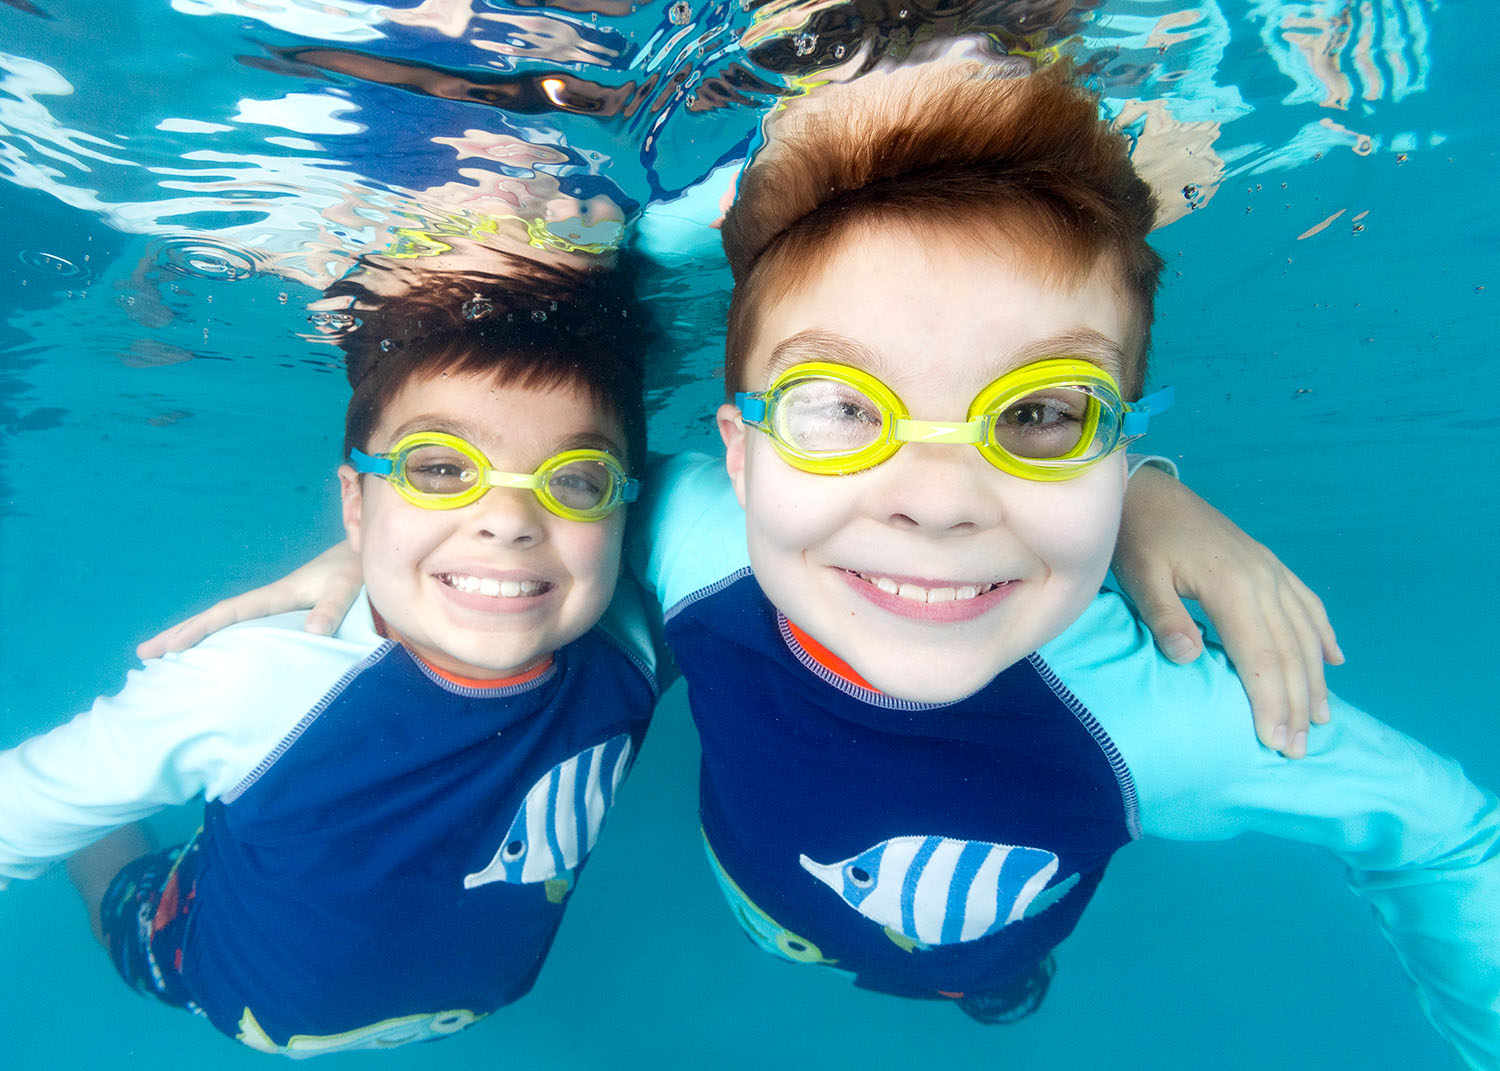 Underwater fun at Charlotte Aquatics